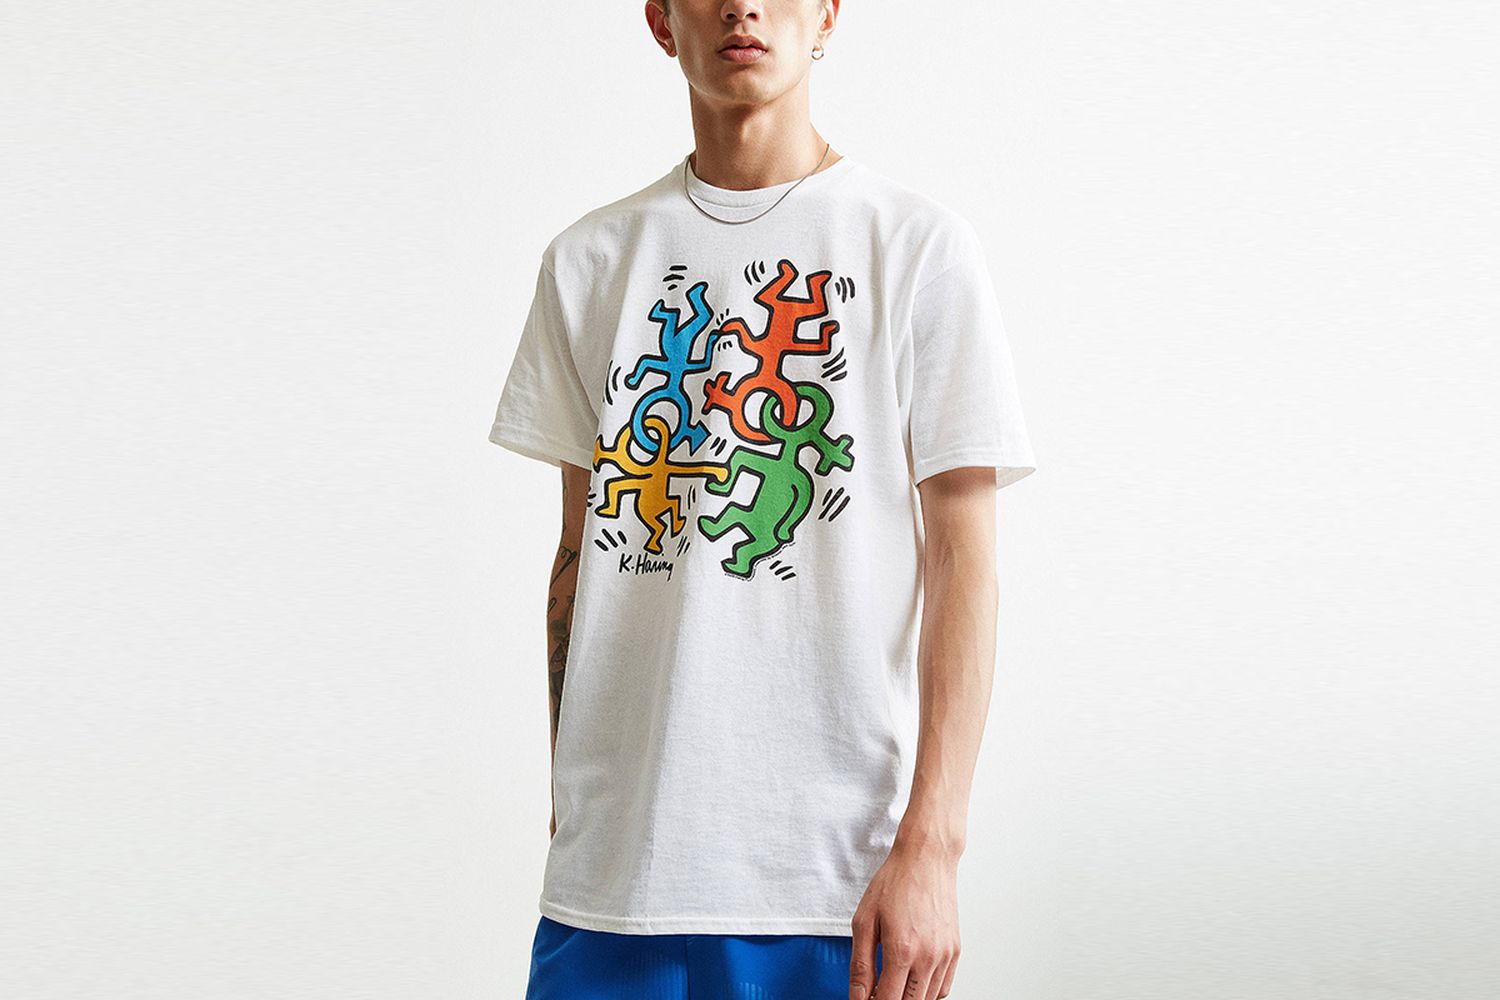 Equality Keith Haring T-Shirt